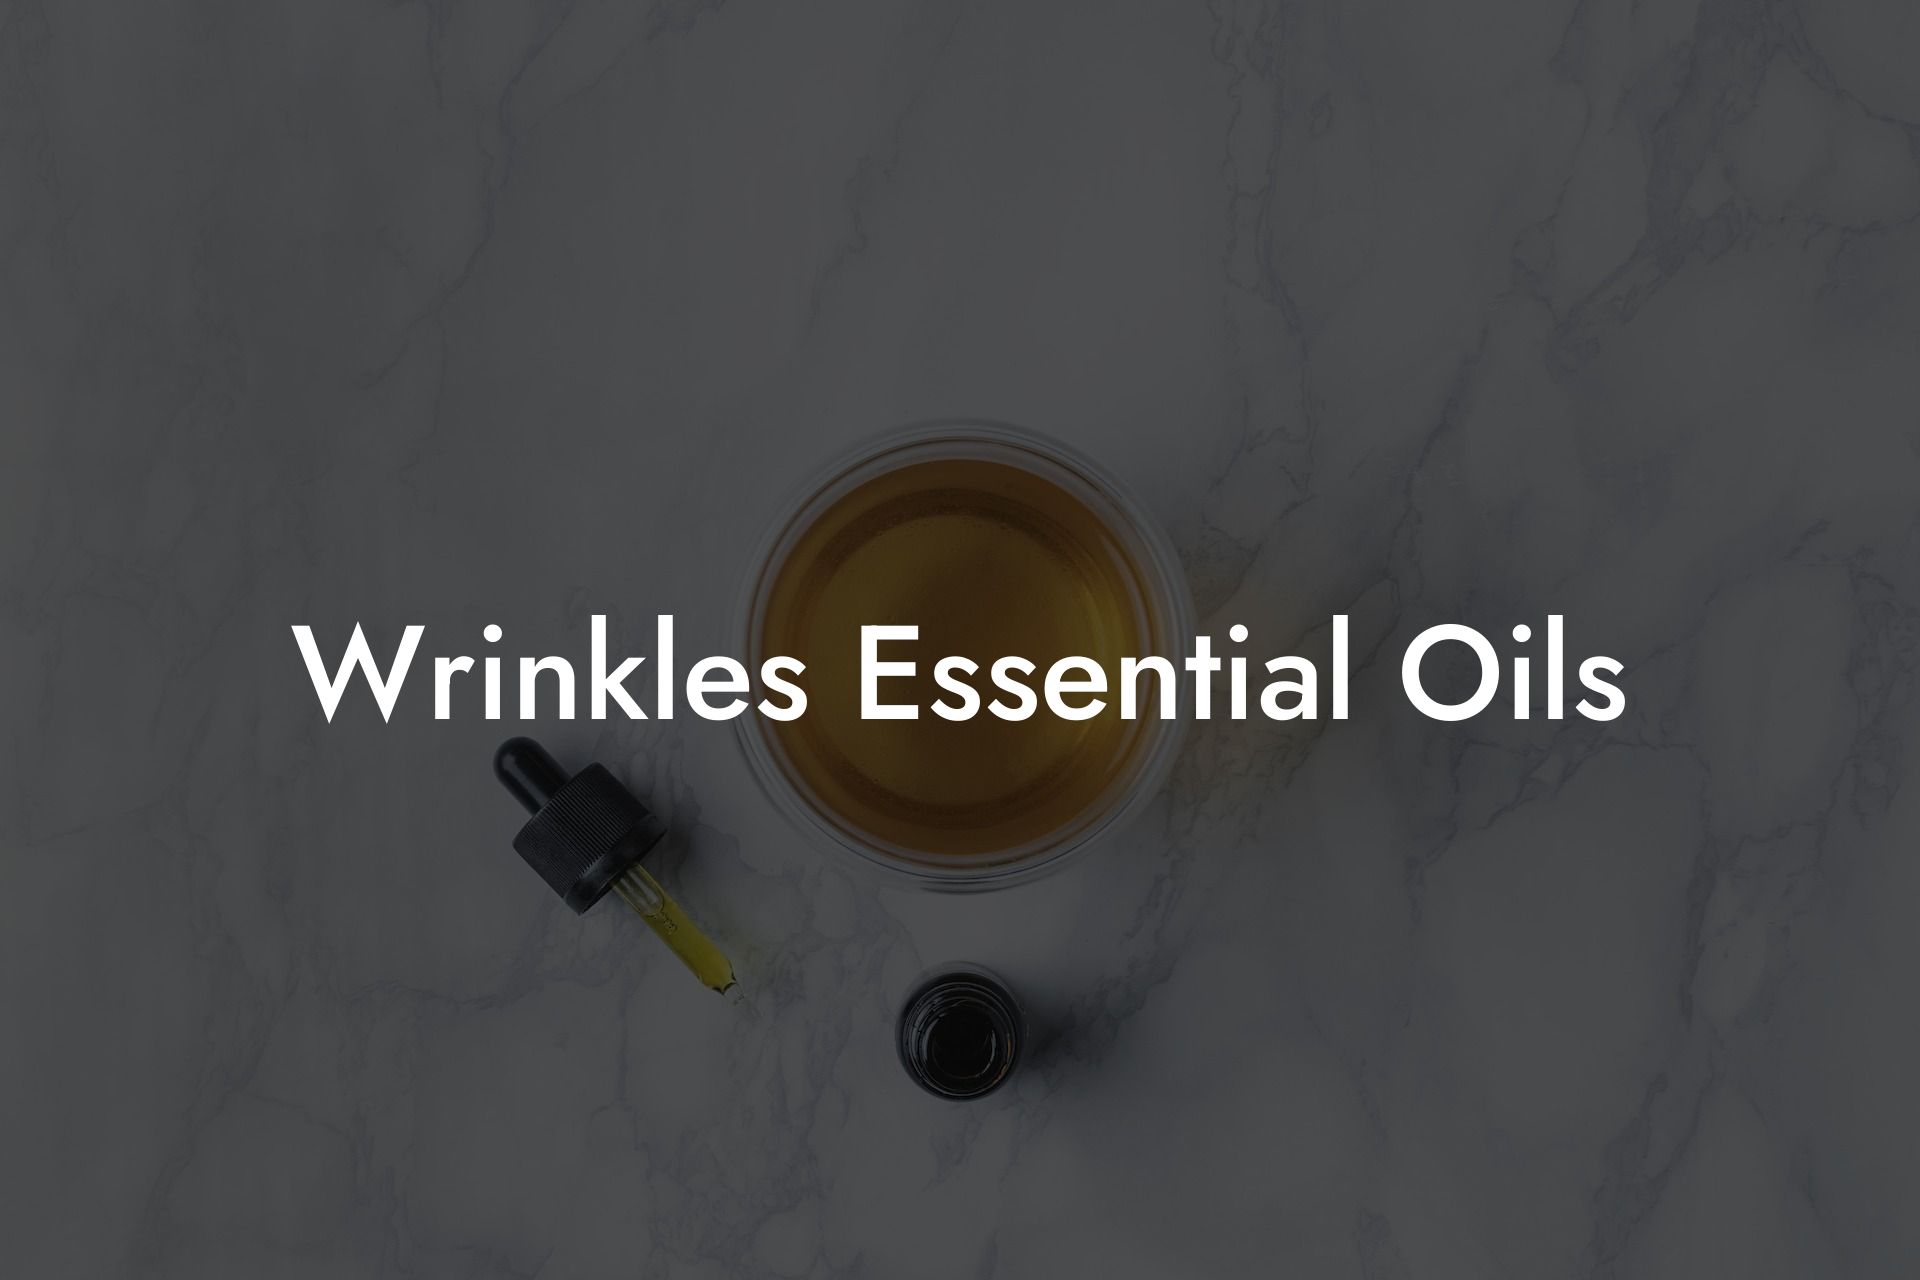 Wrinkles Essential Oils